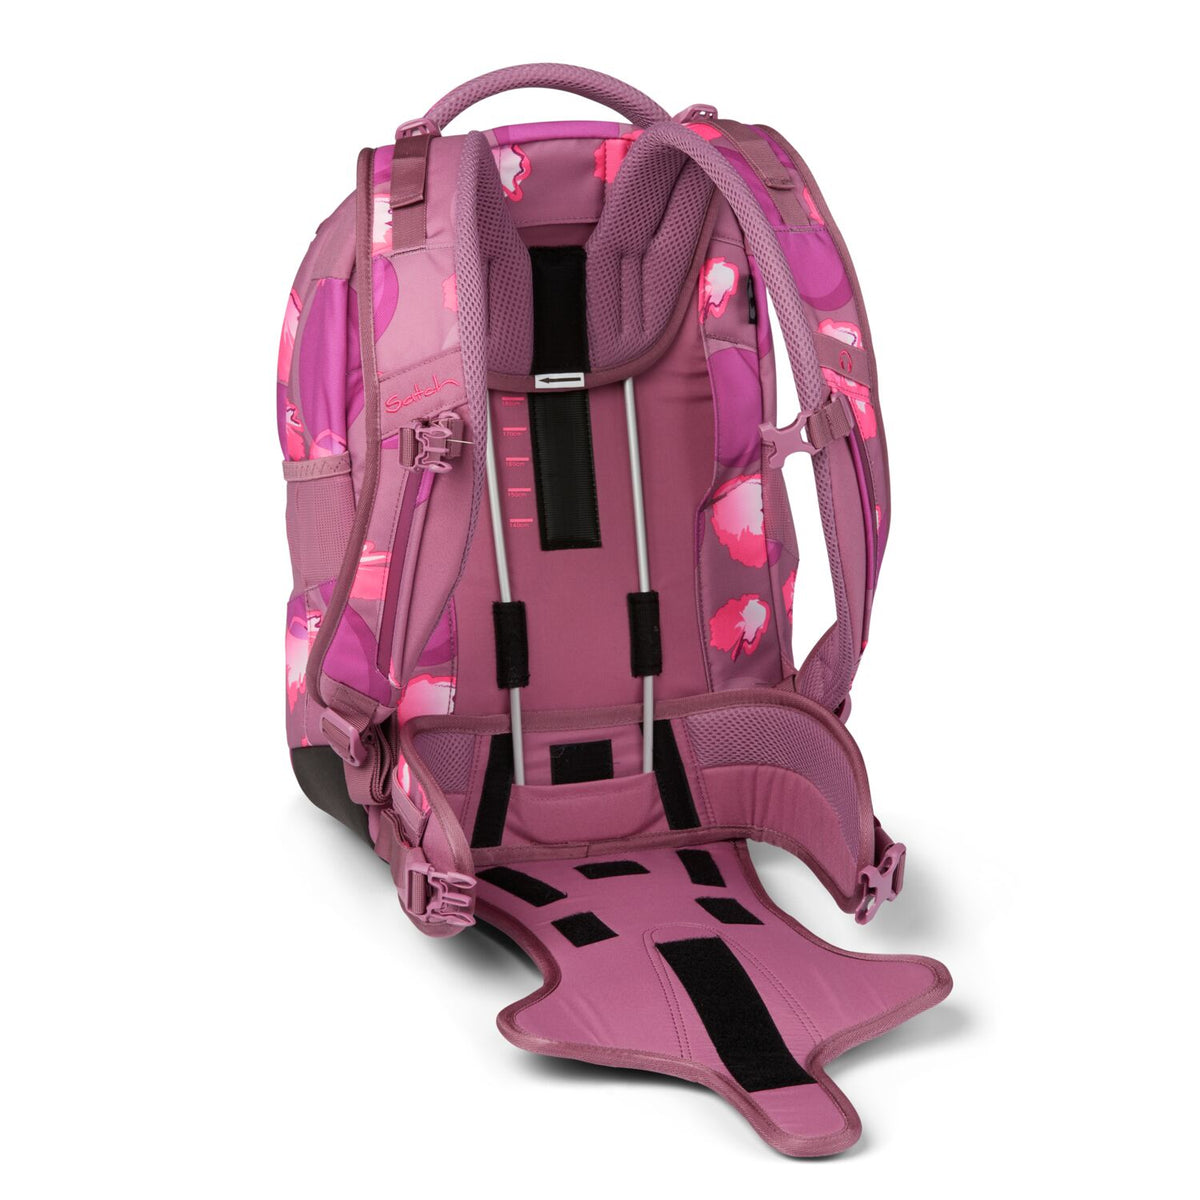 Ergonomic school backpack for girls teen Satch Sleek